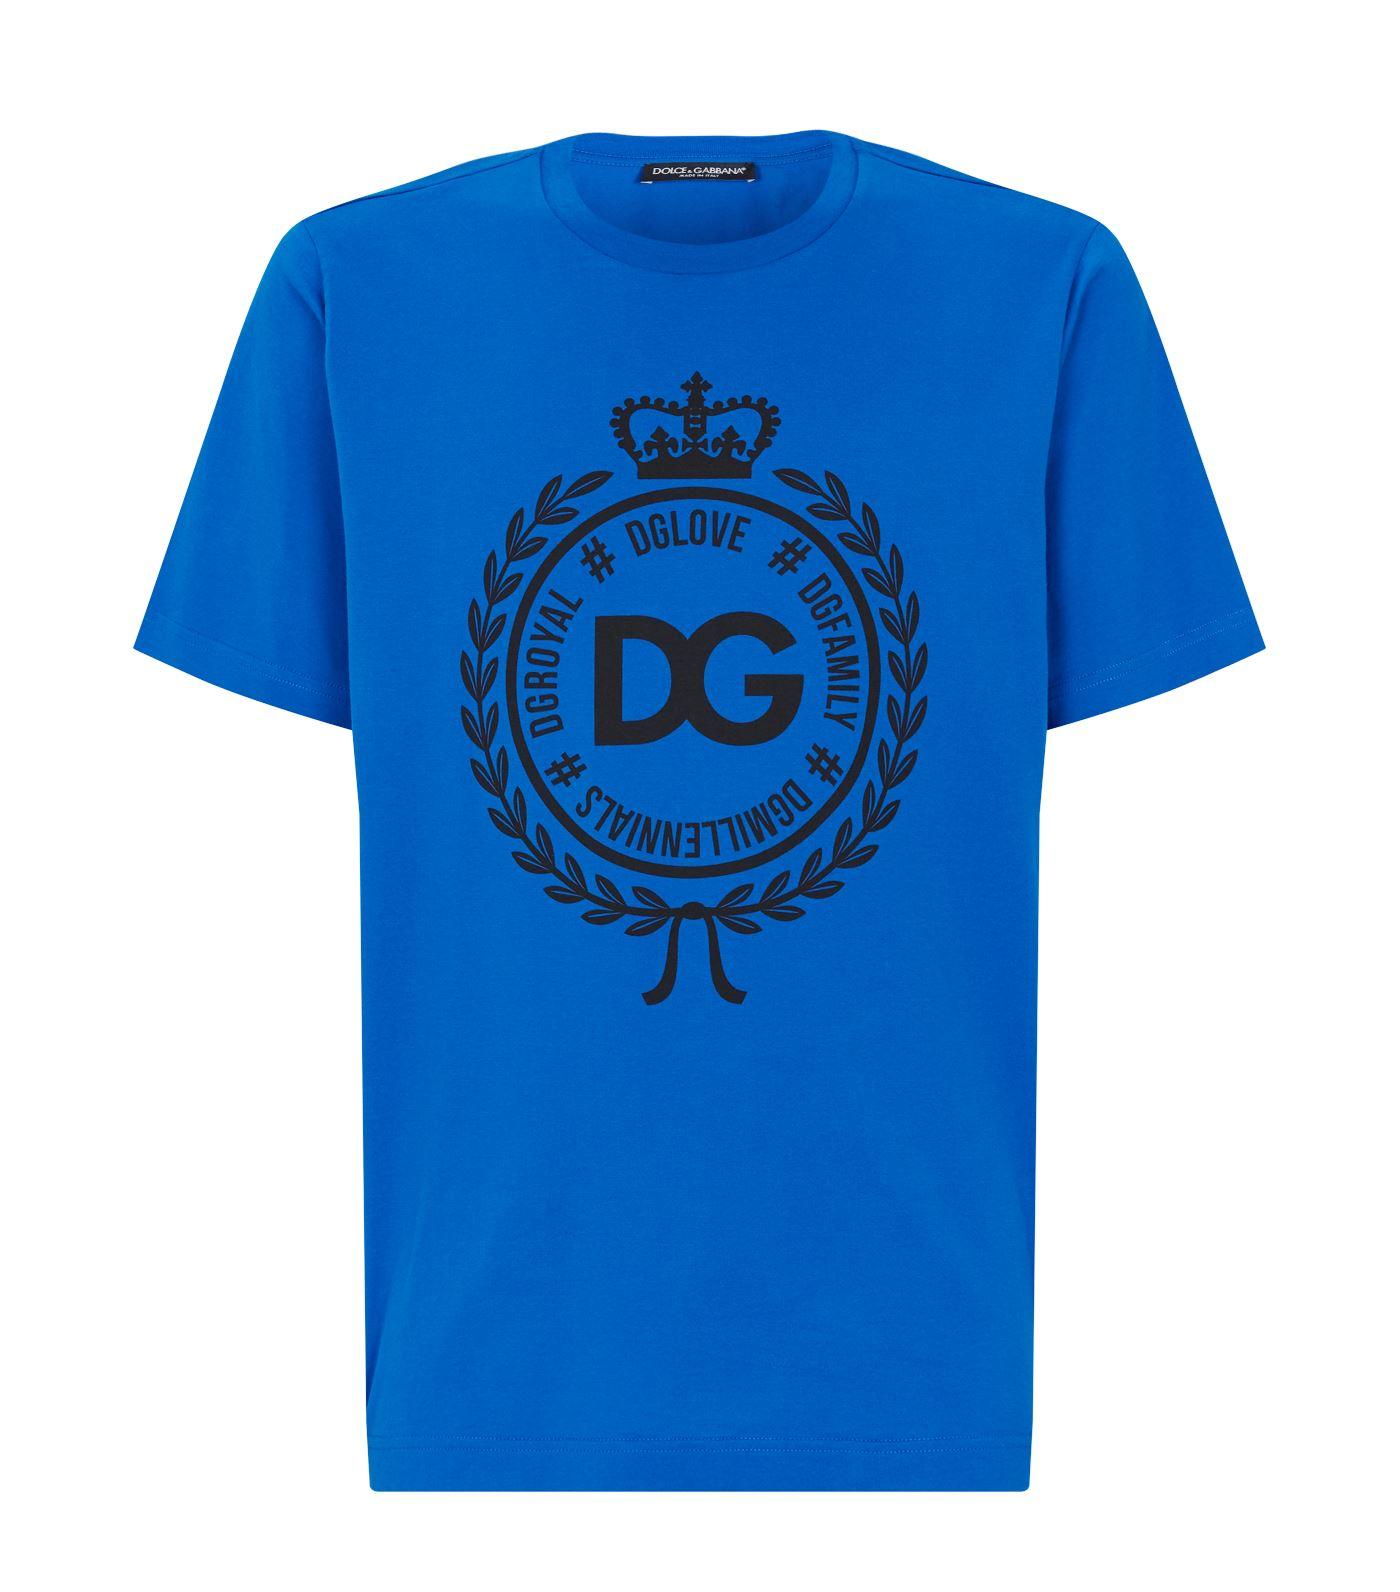 Dolce & Gabbana Logo T-shirt in Blue for Men - Lyst